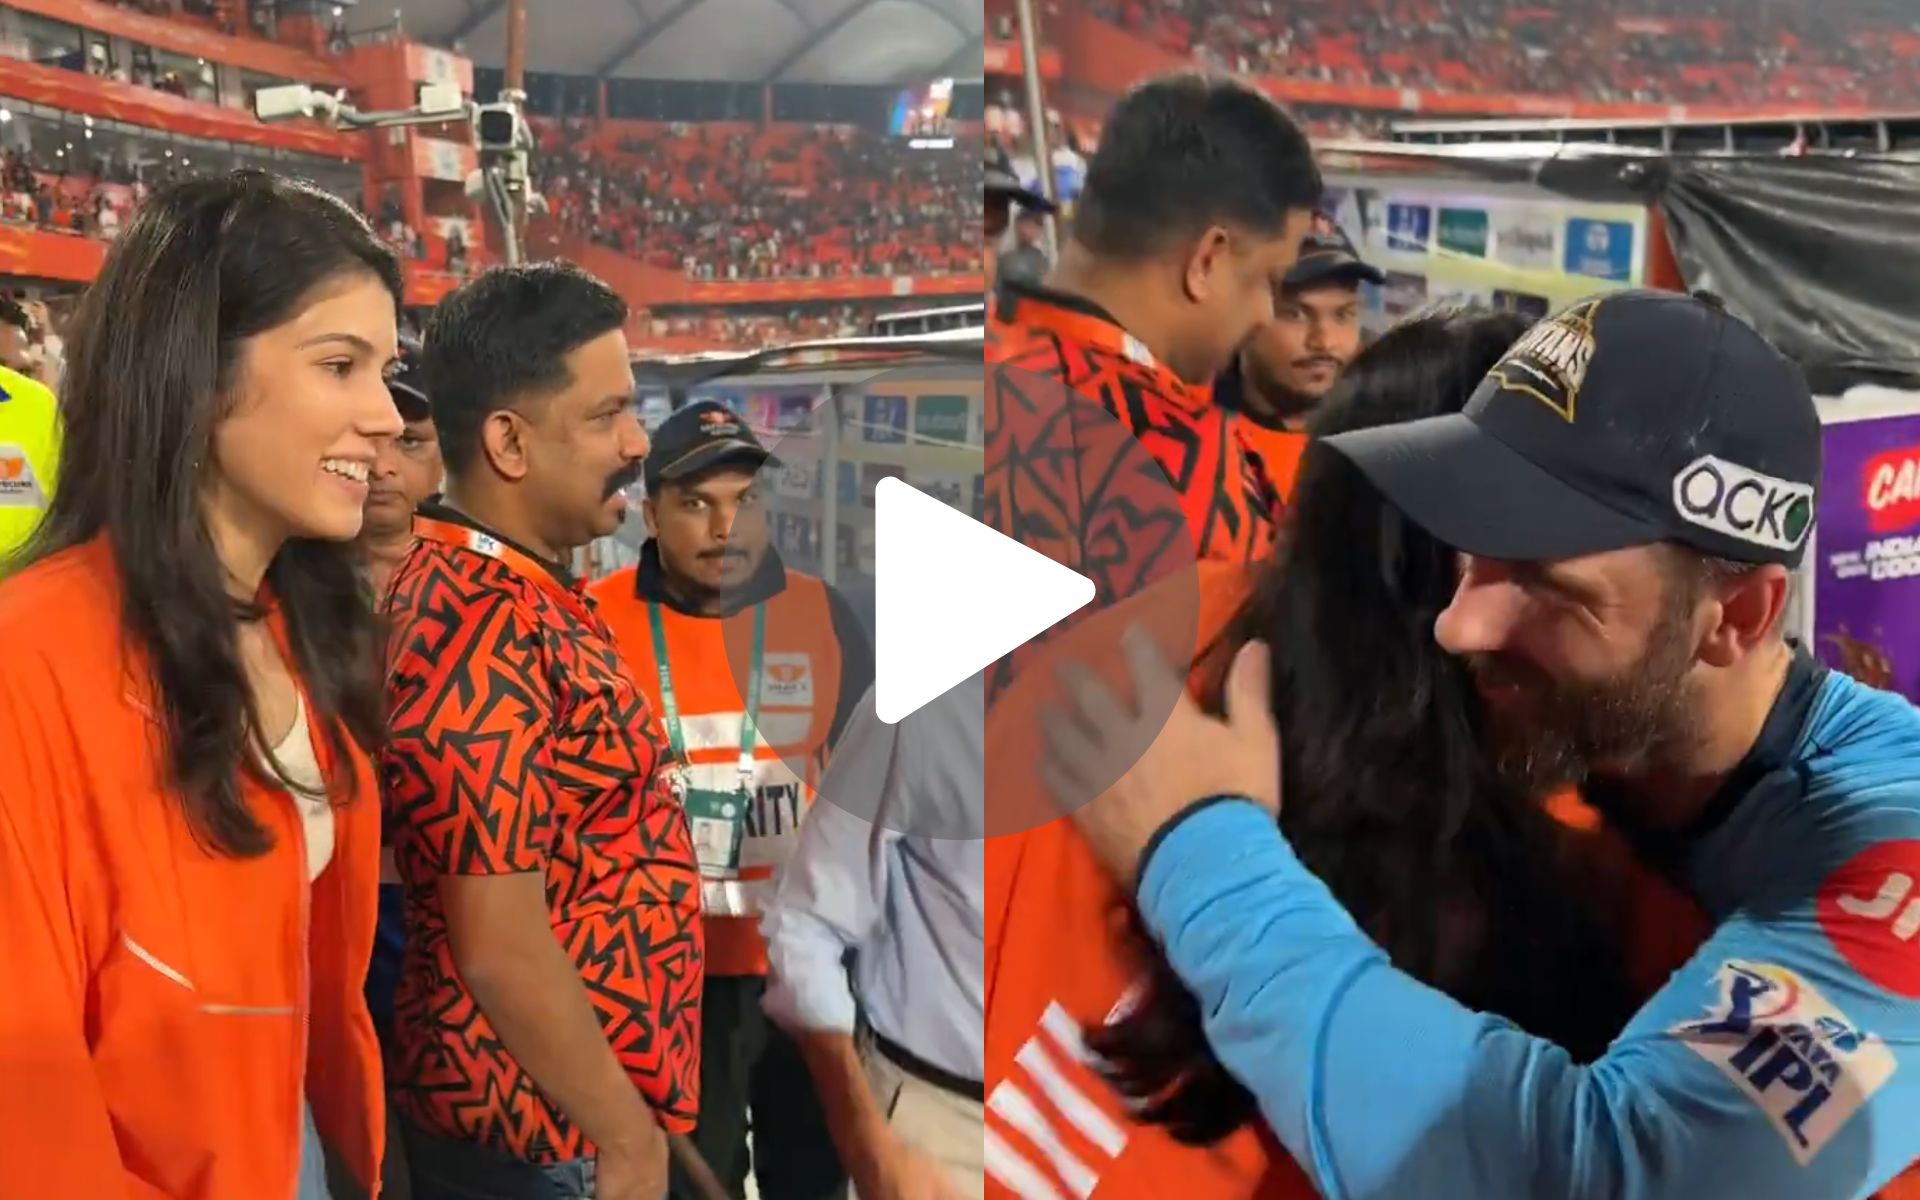 [Watch] Ex-Friends Reunited! Kavya Maran, Williamson Share 'Cozy Hug' After SRH vs GT Washout